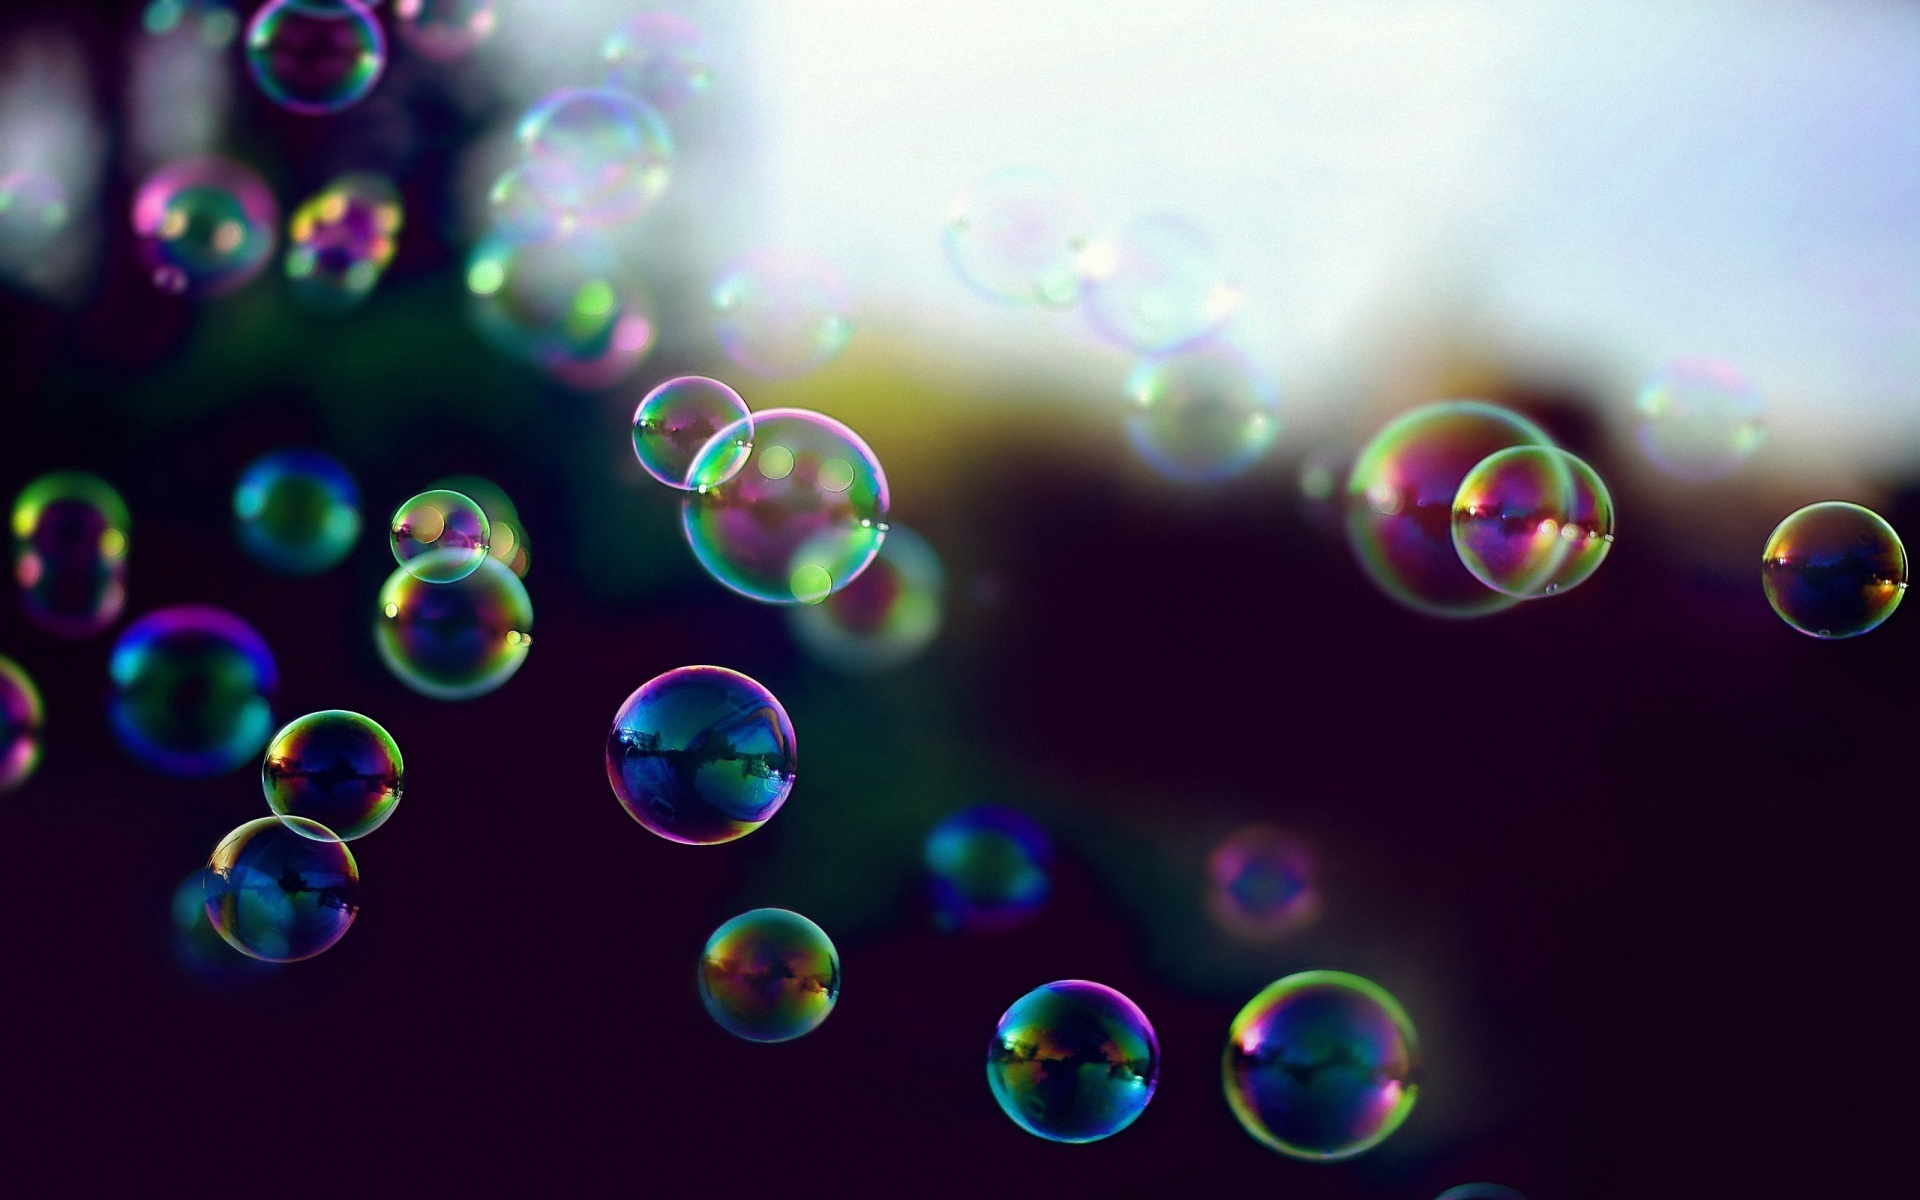 Bubbles Image Presentation